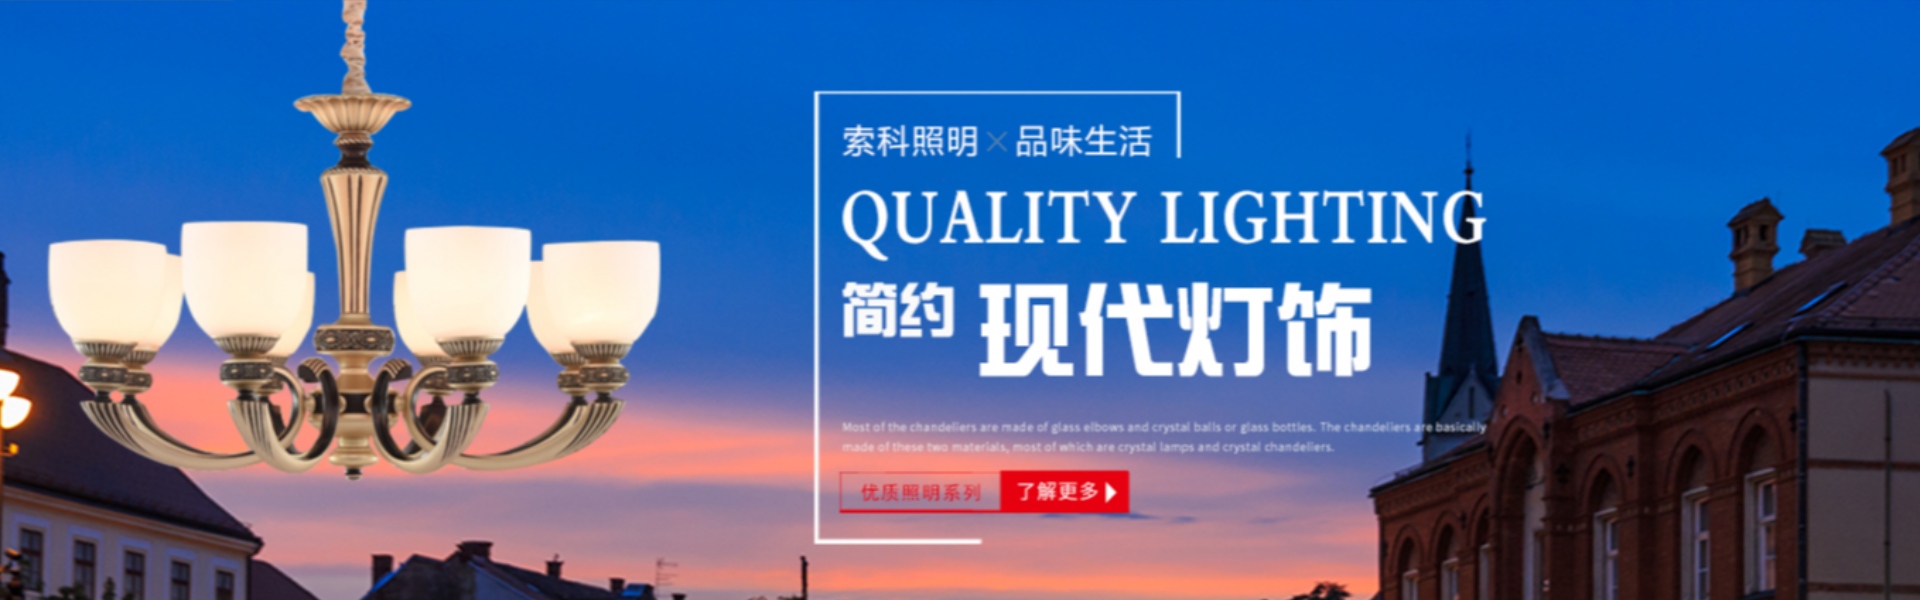 hembelysning, utomhusbelysning, solbelysning,Zhongshan Suoke Lighting Electric Co., Ltd.